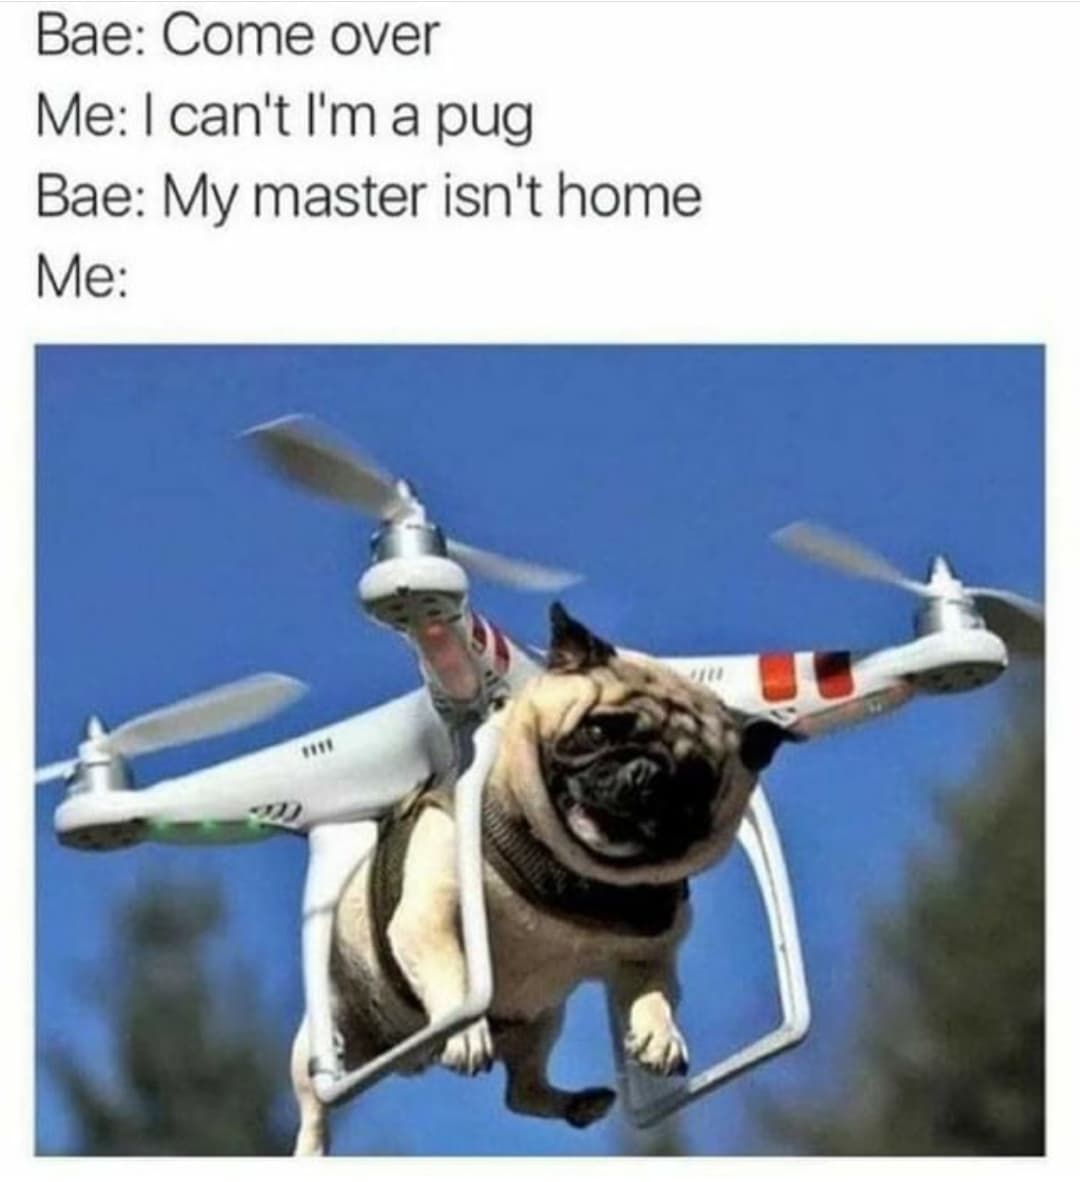 cool drone - Bae Come over Me I can't I'm a pug Bae My master isn't home Me